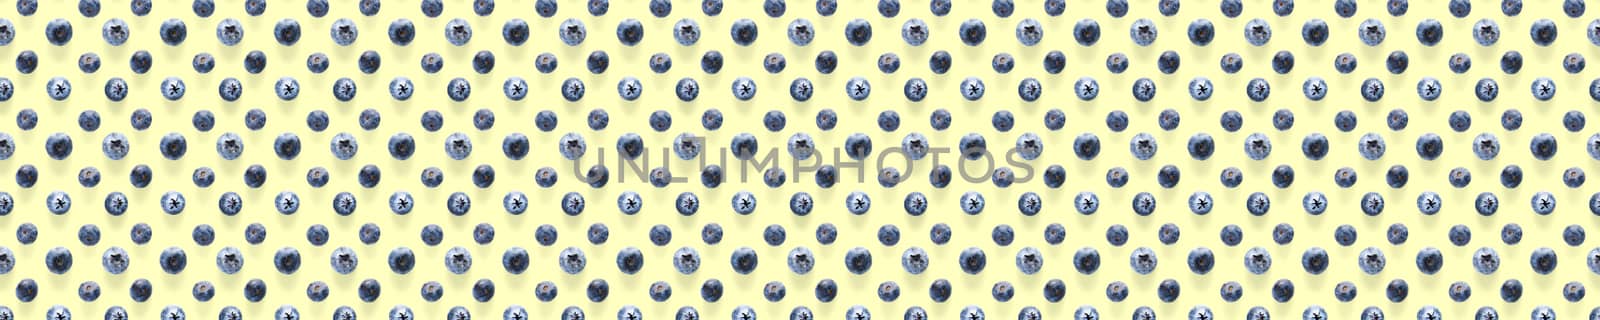 Background of Freshly picked blueberries on yellow backdrop. Blackberry modern flatlay background.